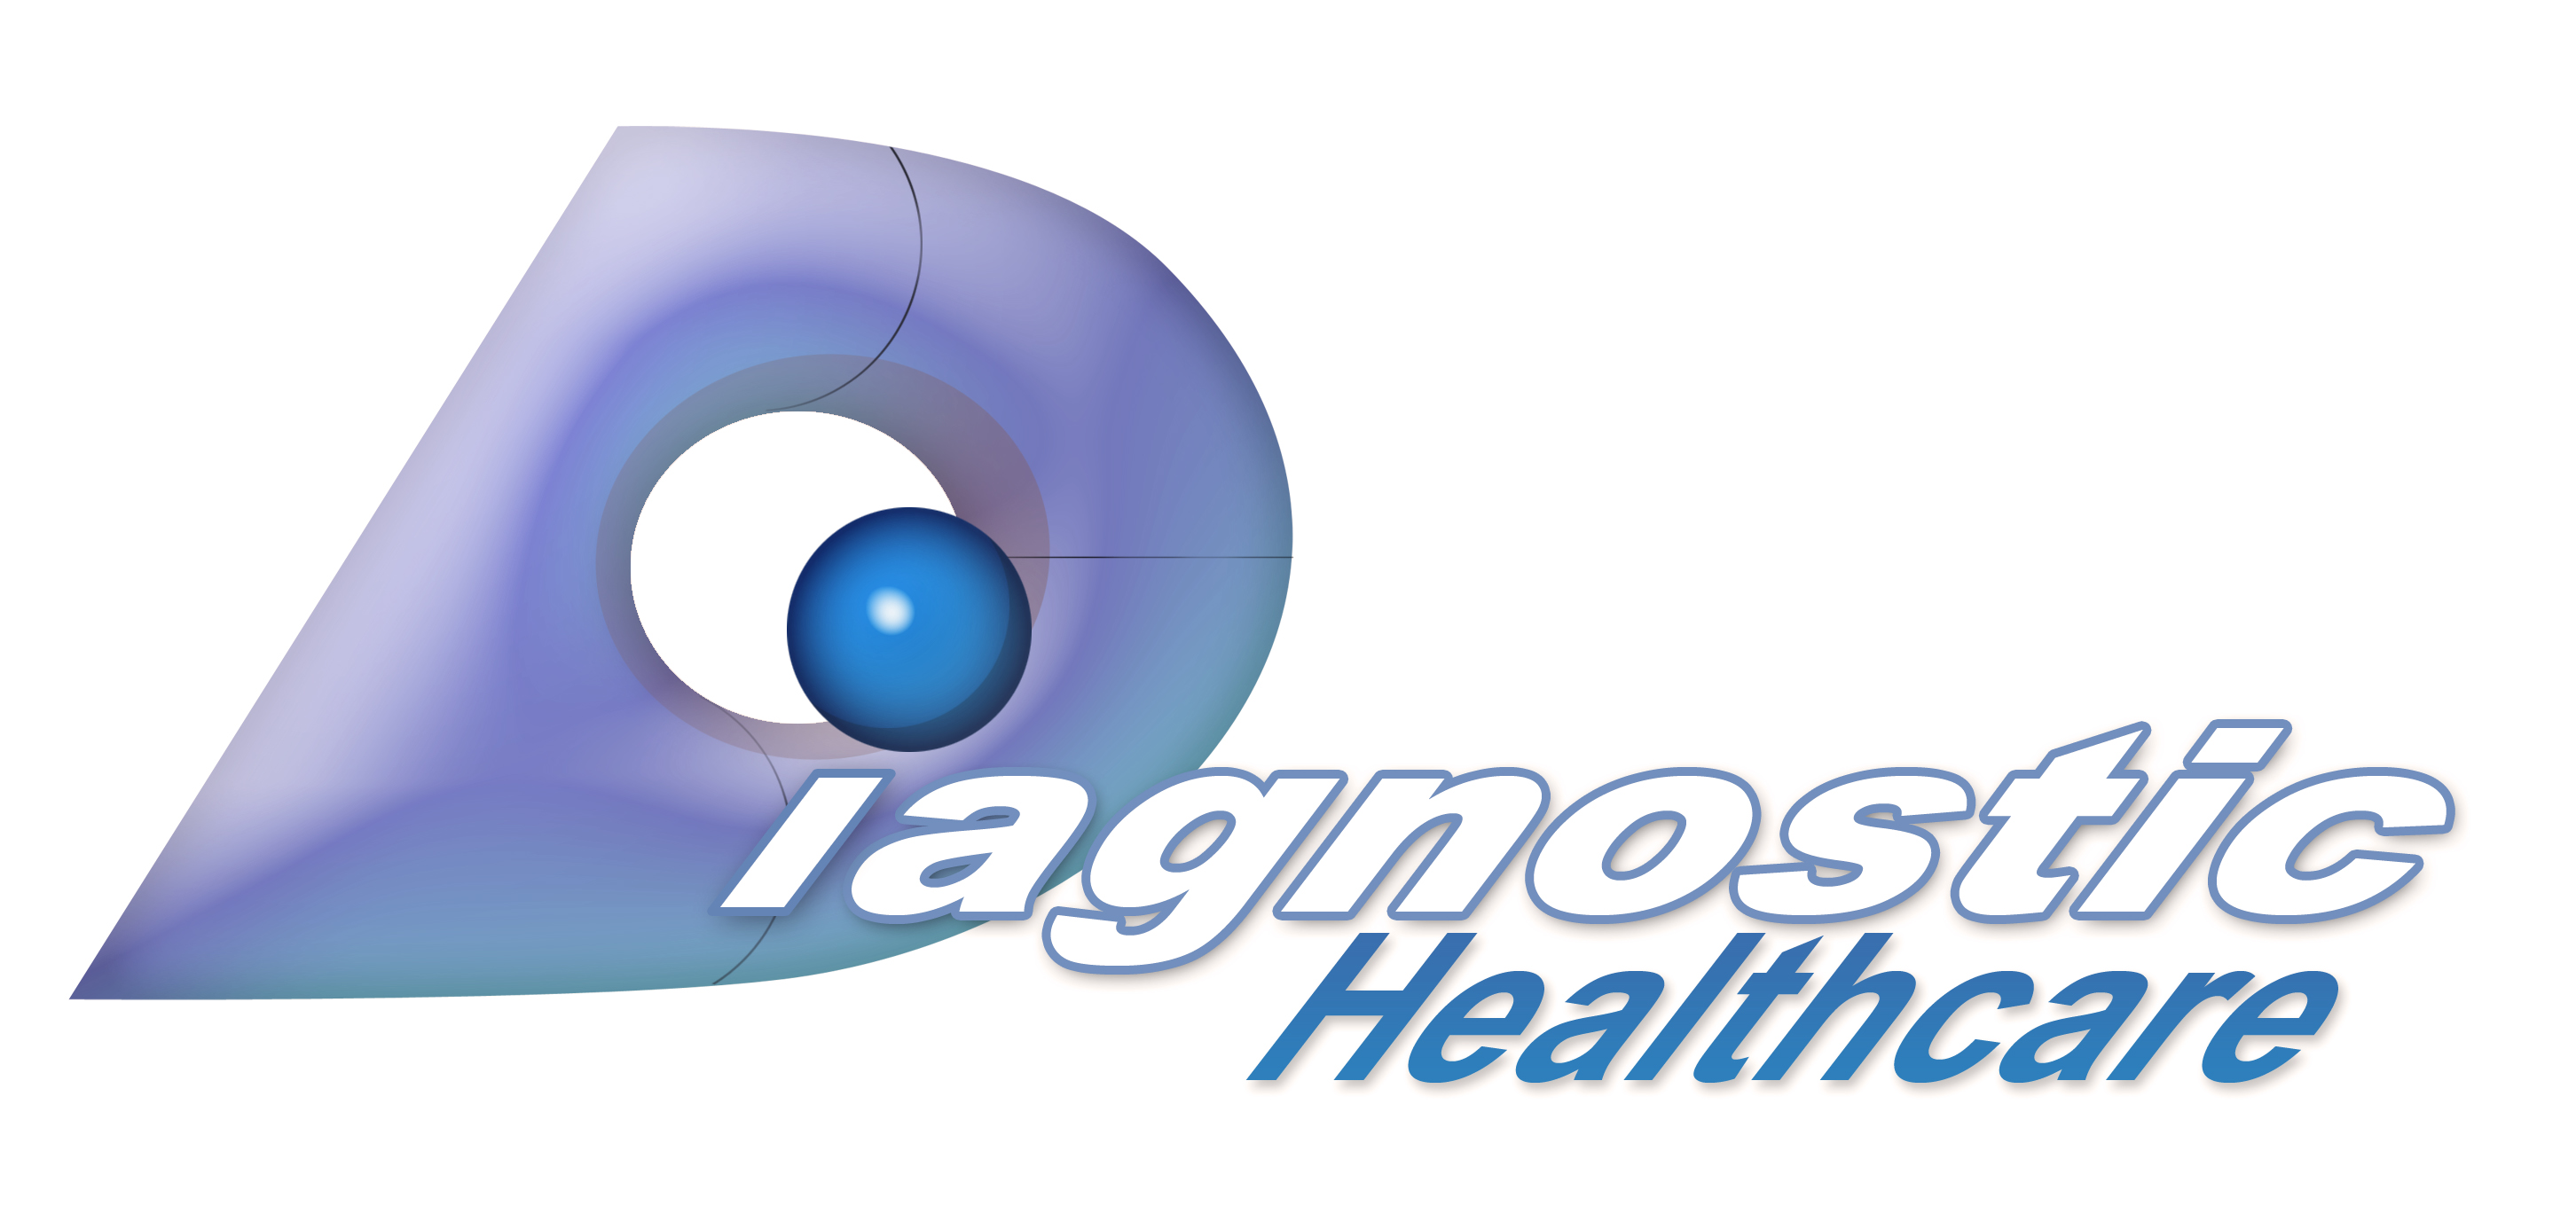 Diagnostic Healthcare Limited  Logo